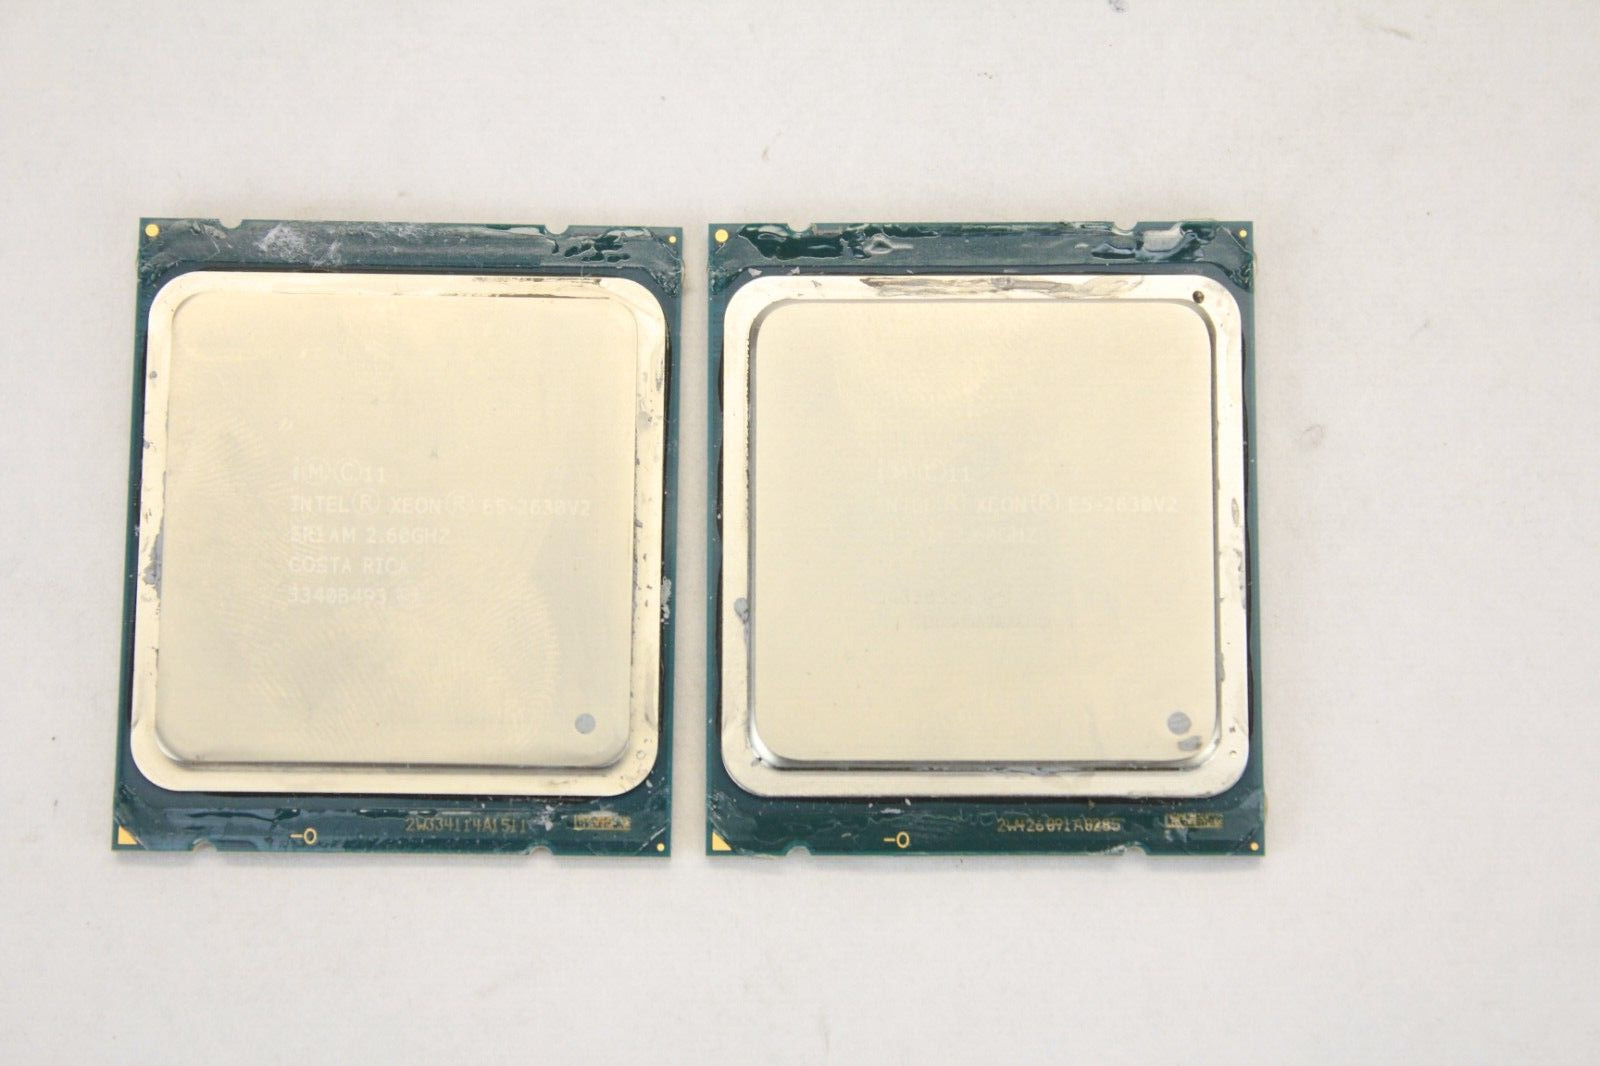 Lot of 2 Intel Xeon E5-2630 V2 2.6GHz 15MB/ 8GT/s SR1AM Socket LGA2011 CPU